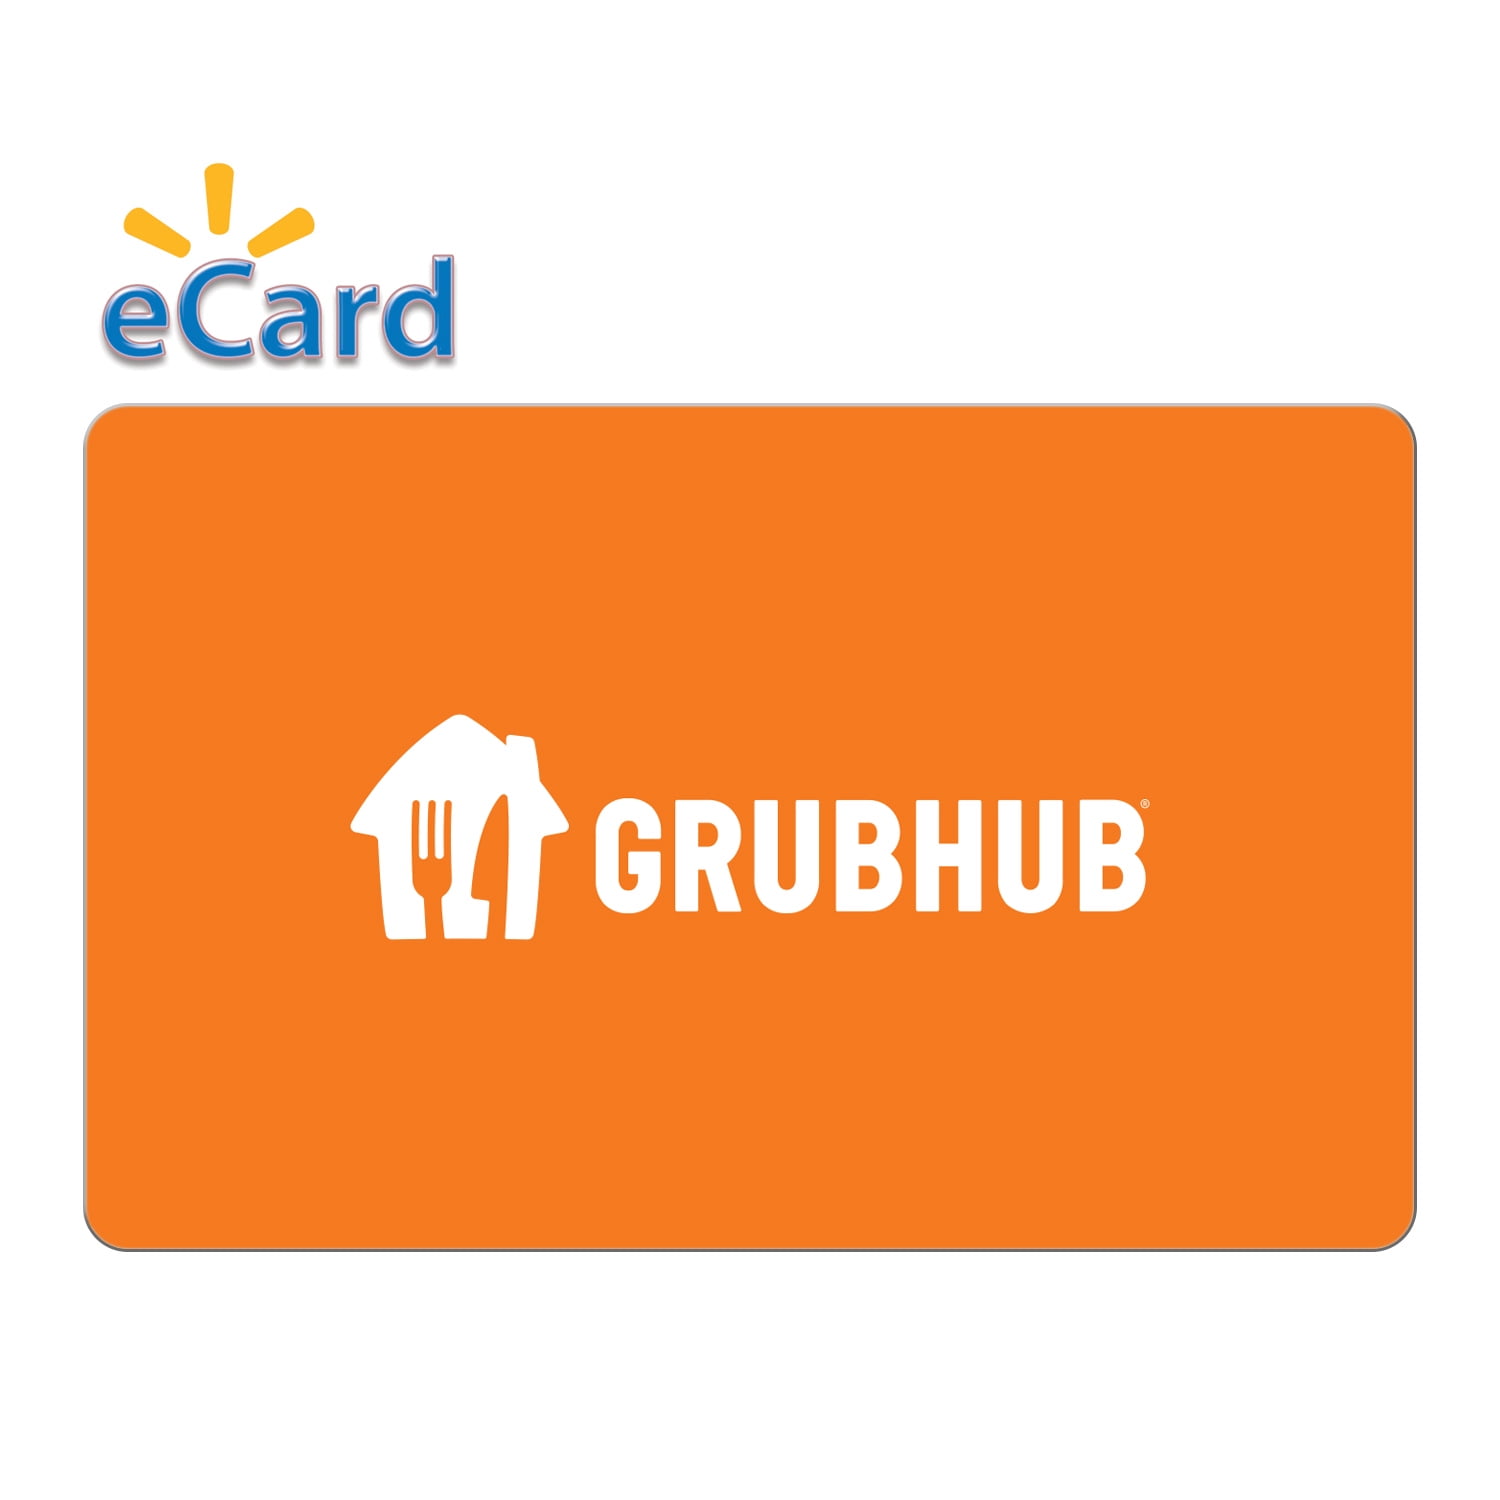 Free Grubhub Gift Card Code Generator